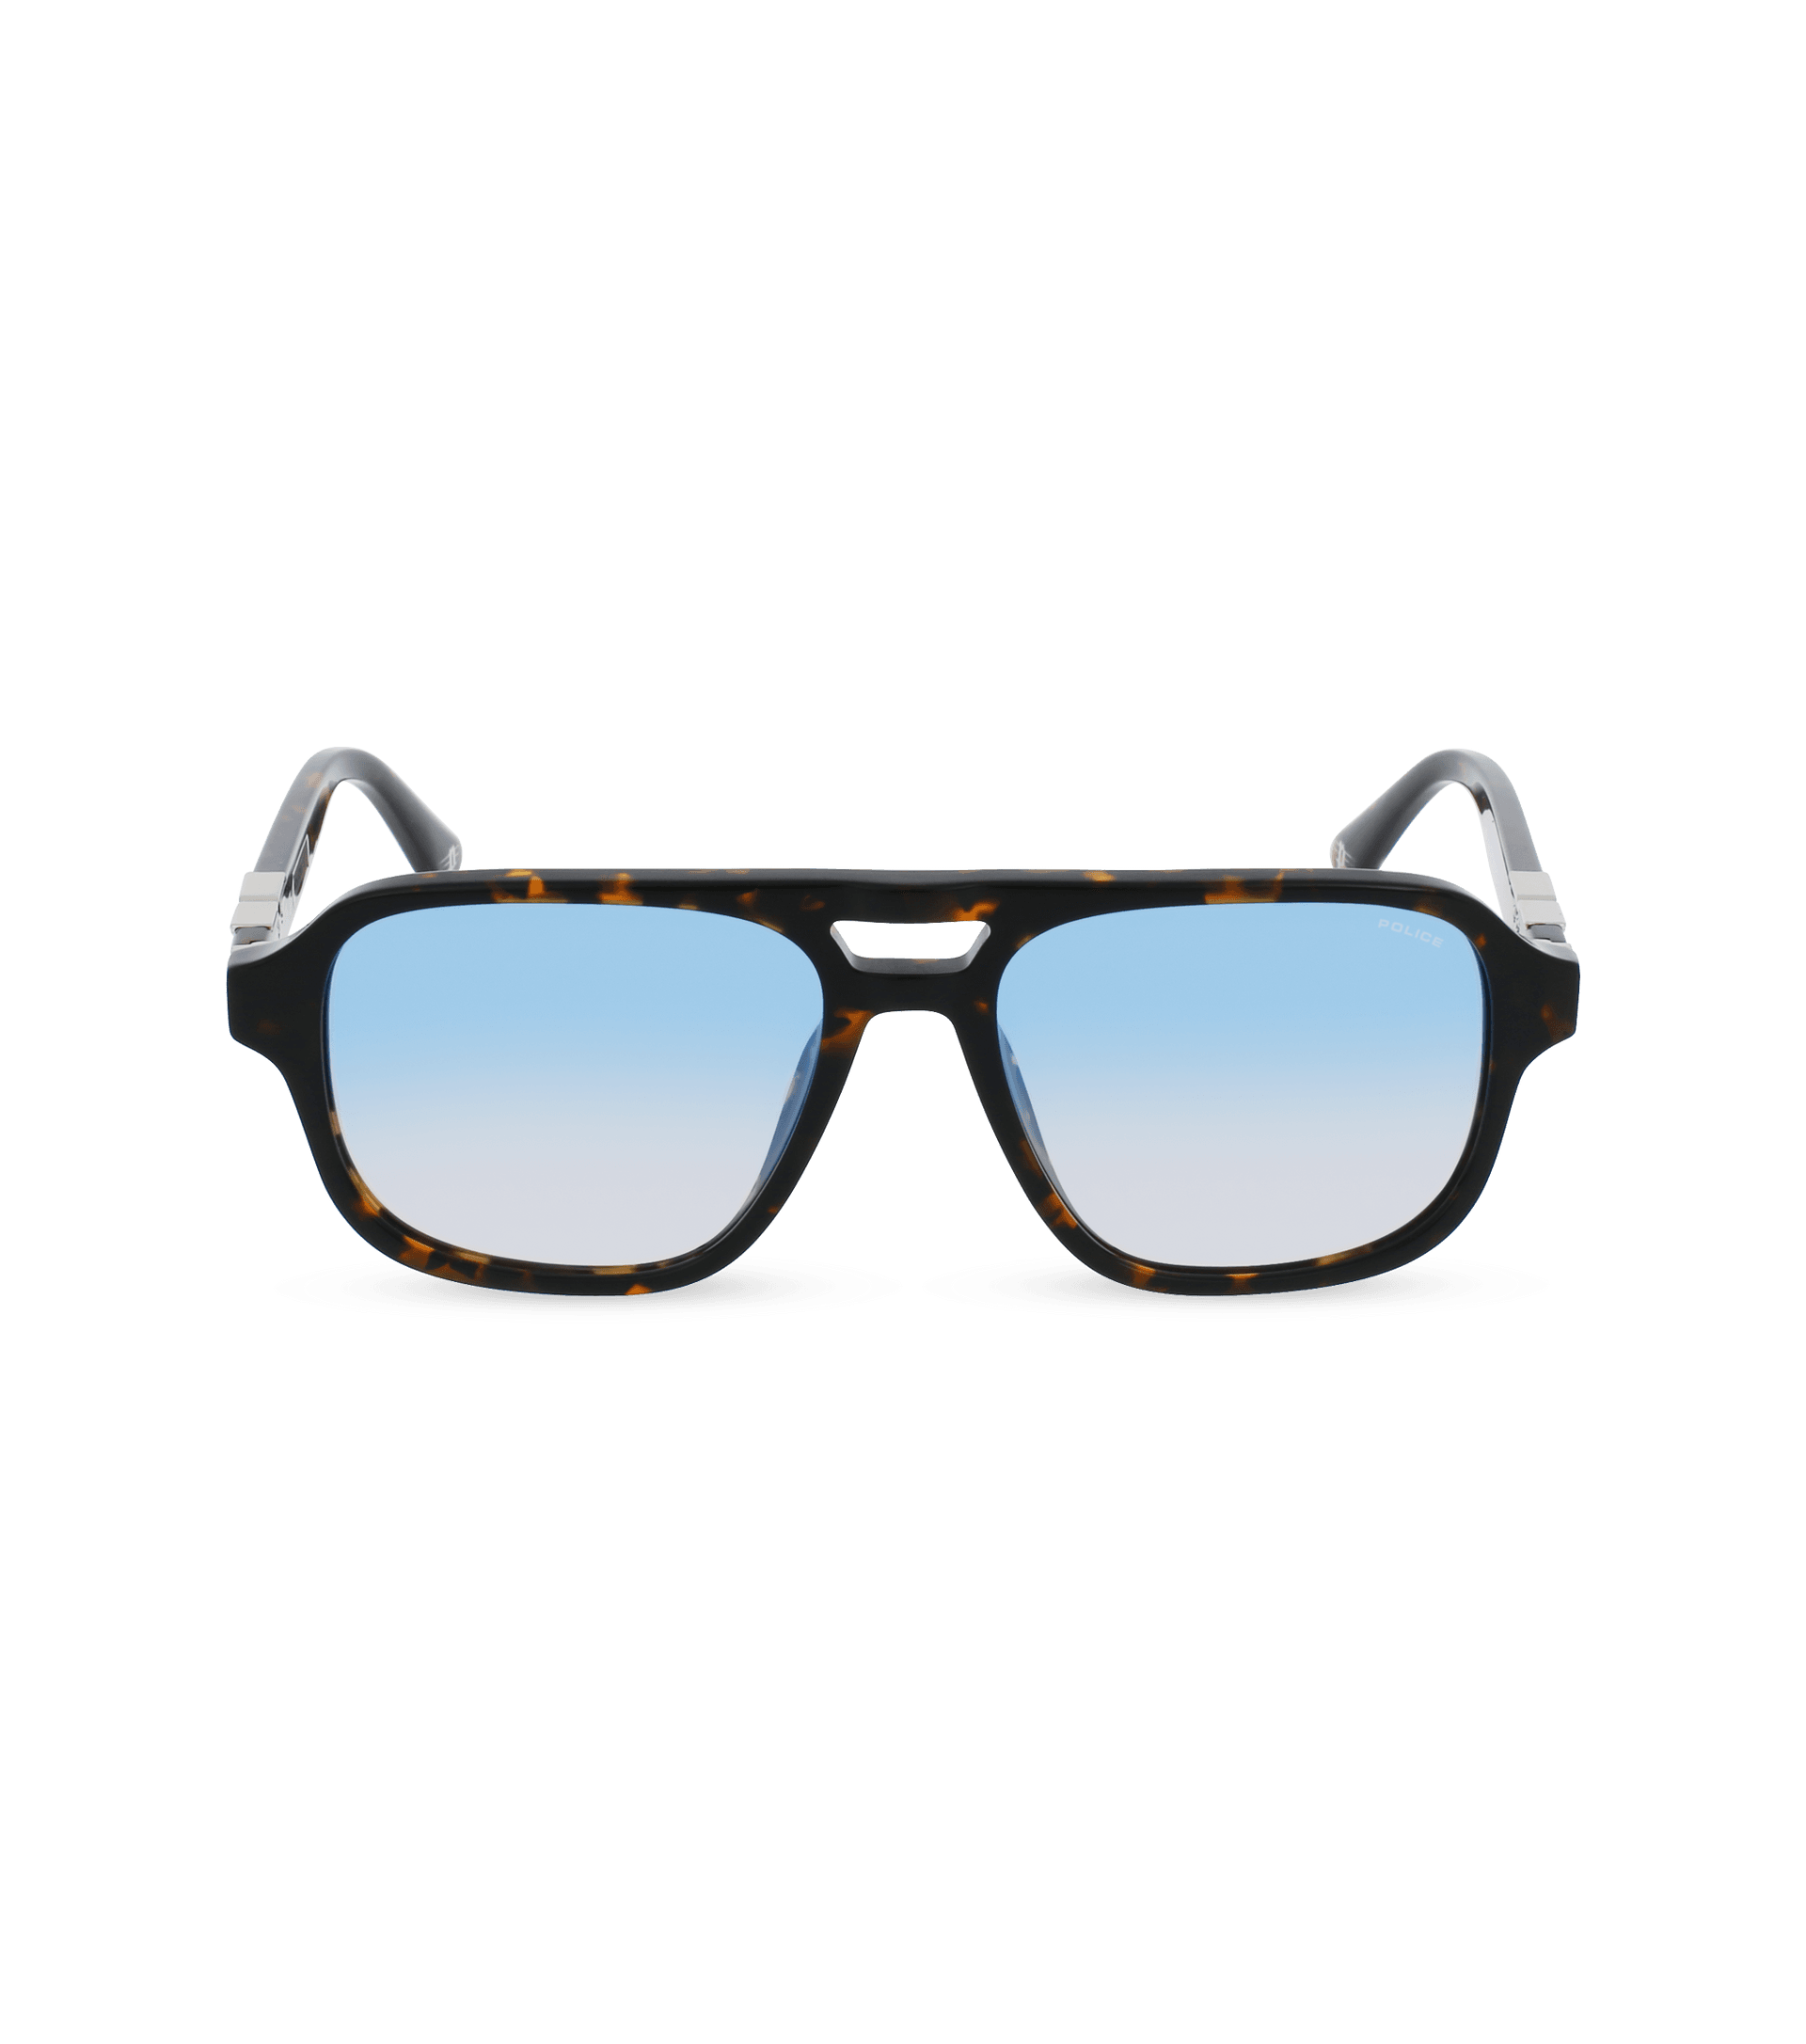 Police SPLL85 08M2 Origins Classic 1 54mm - Sunglasses Gold